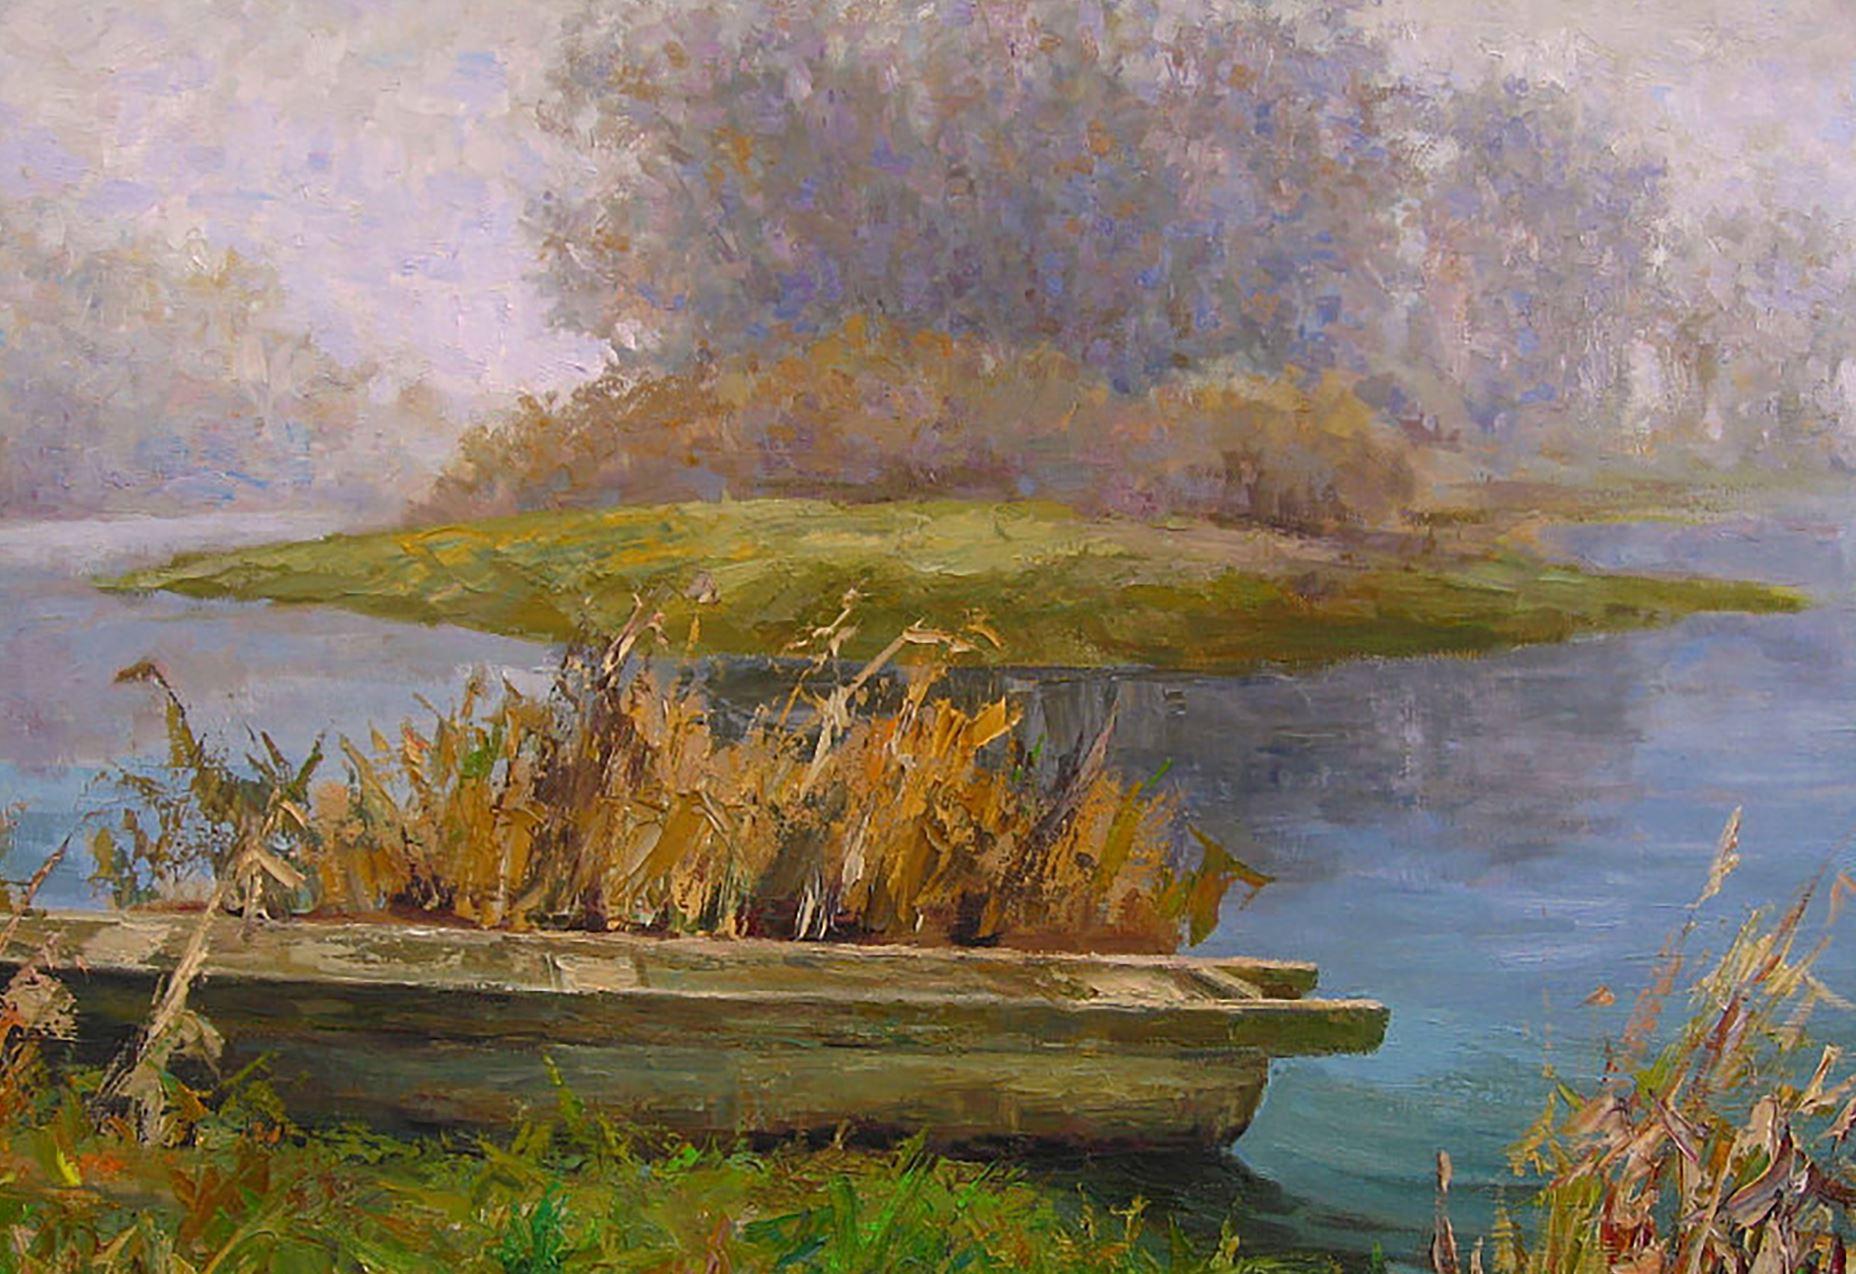 Artist: Boris Serdyuk 
Work: Original oil painting, handmade artwork, one of a kind 
Medium: Oil on Canvas
Style: Impressionism
Year: 2020
Title: Morning Fog
Size: 23.5